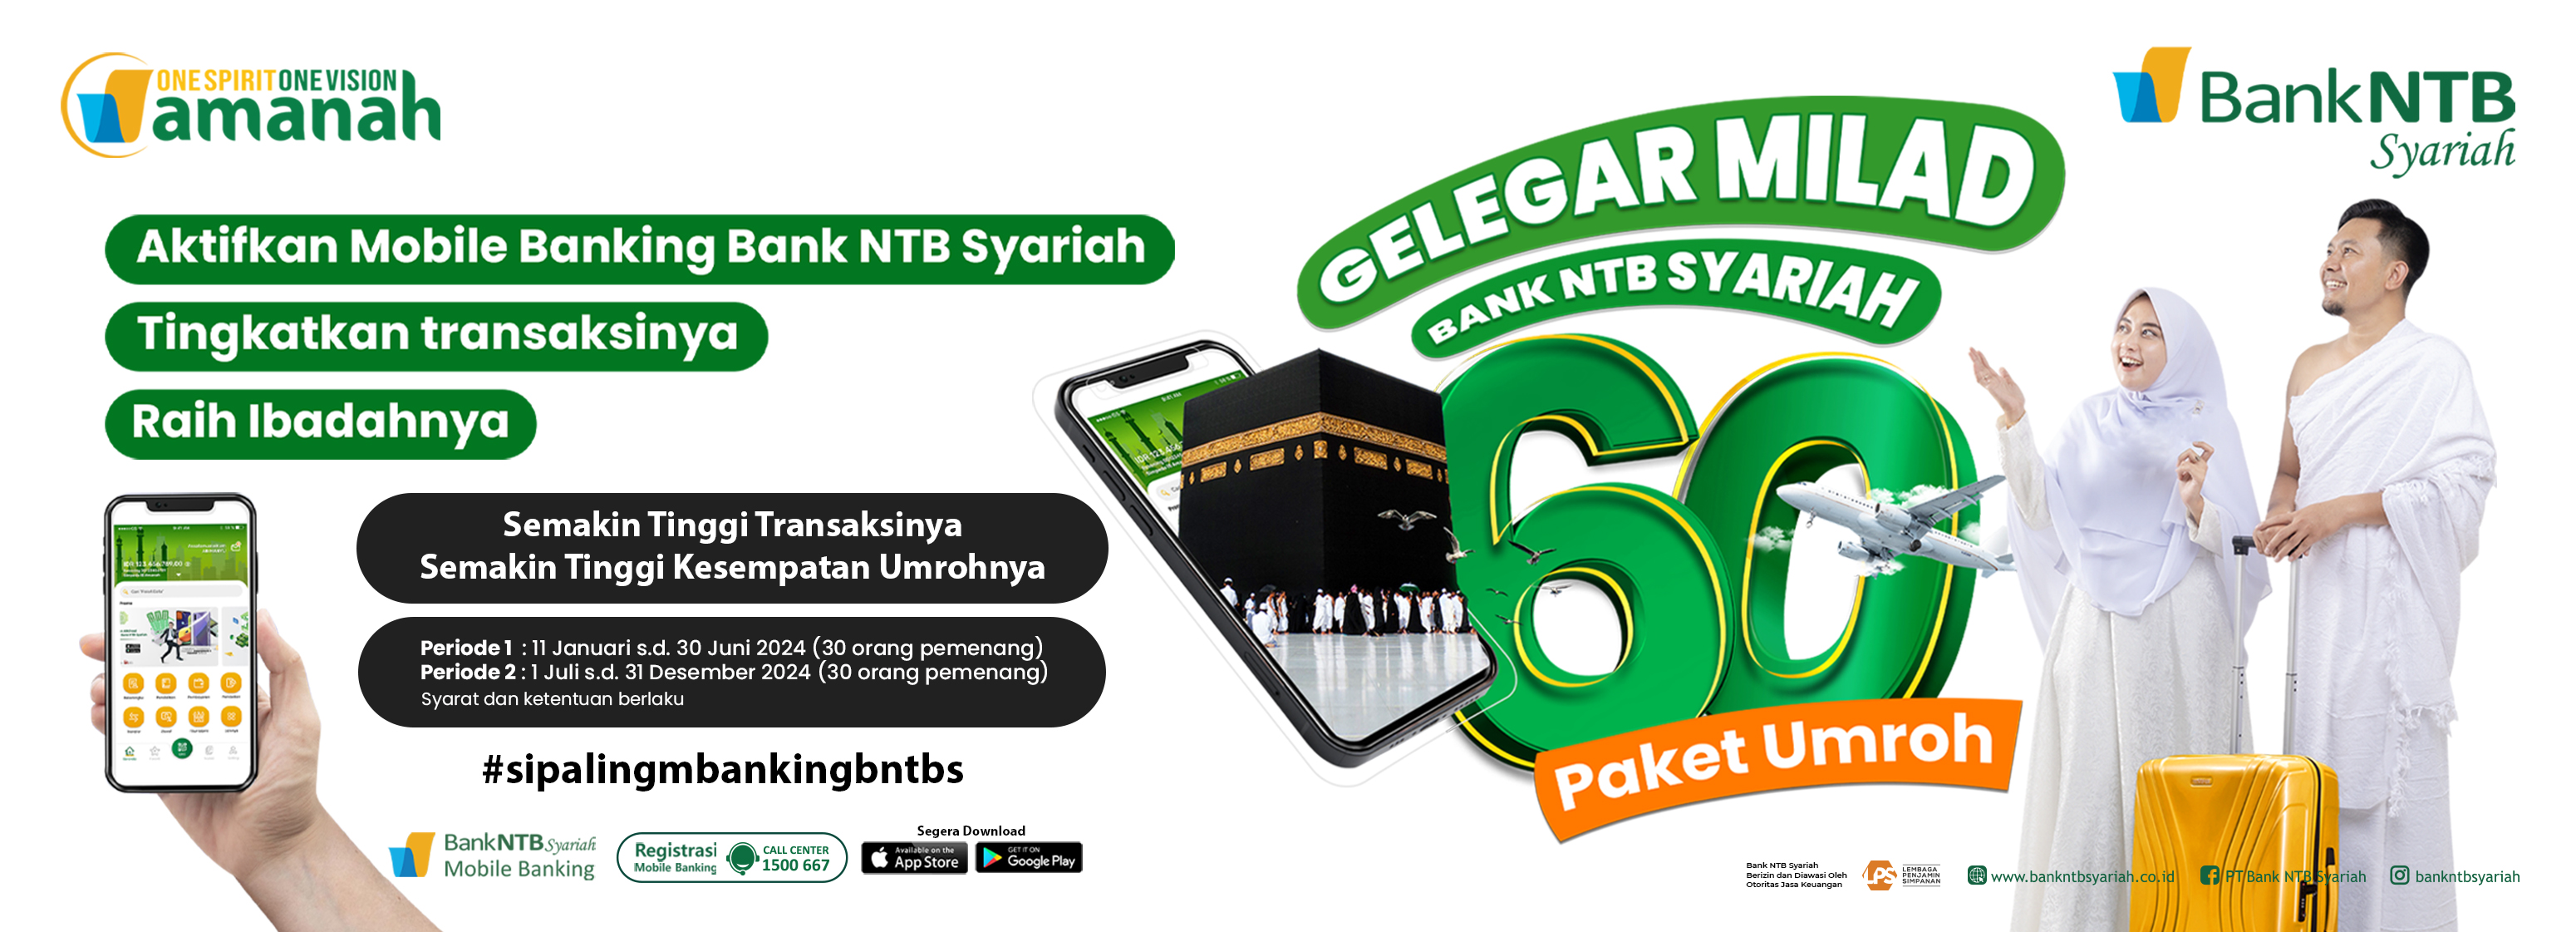 Gelegar-Milad-Bank-NTB-Syariah-ke-60.html